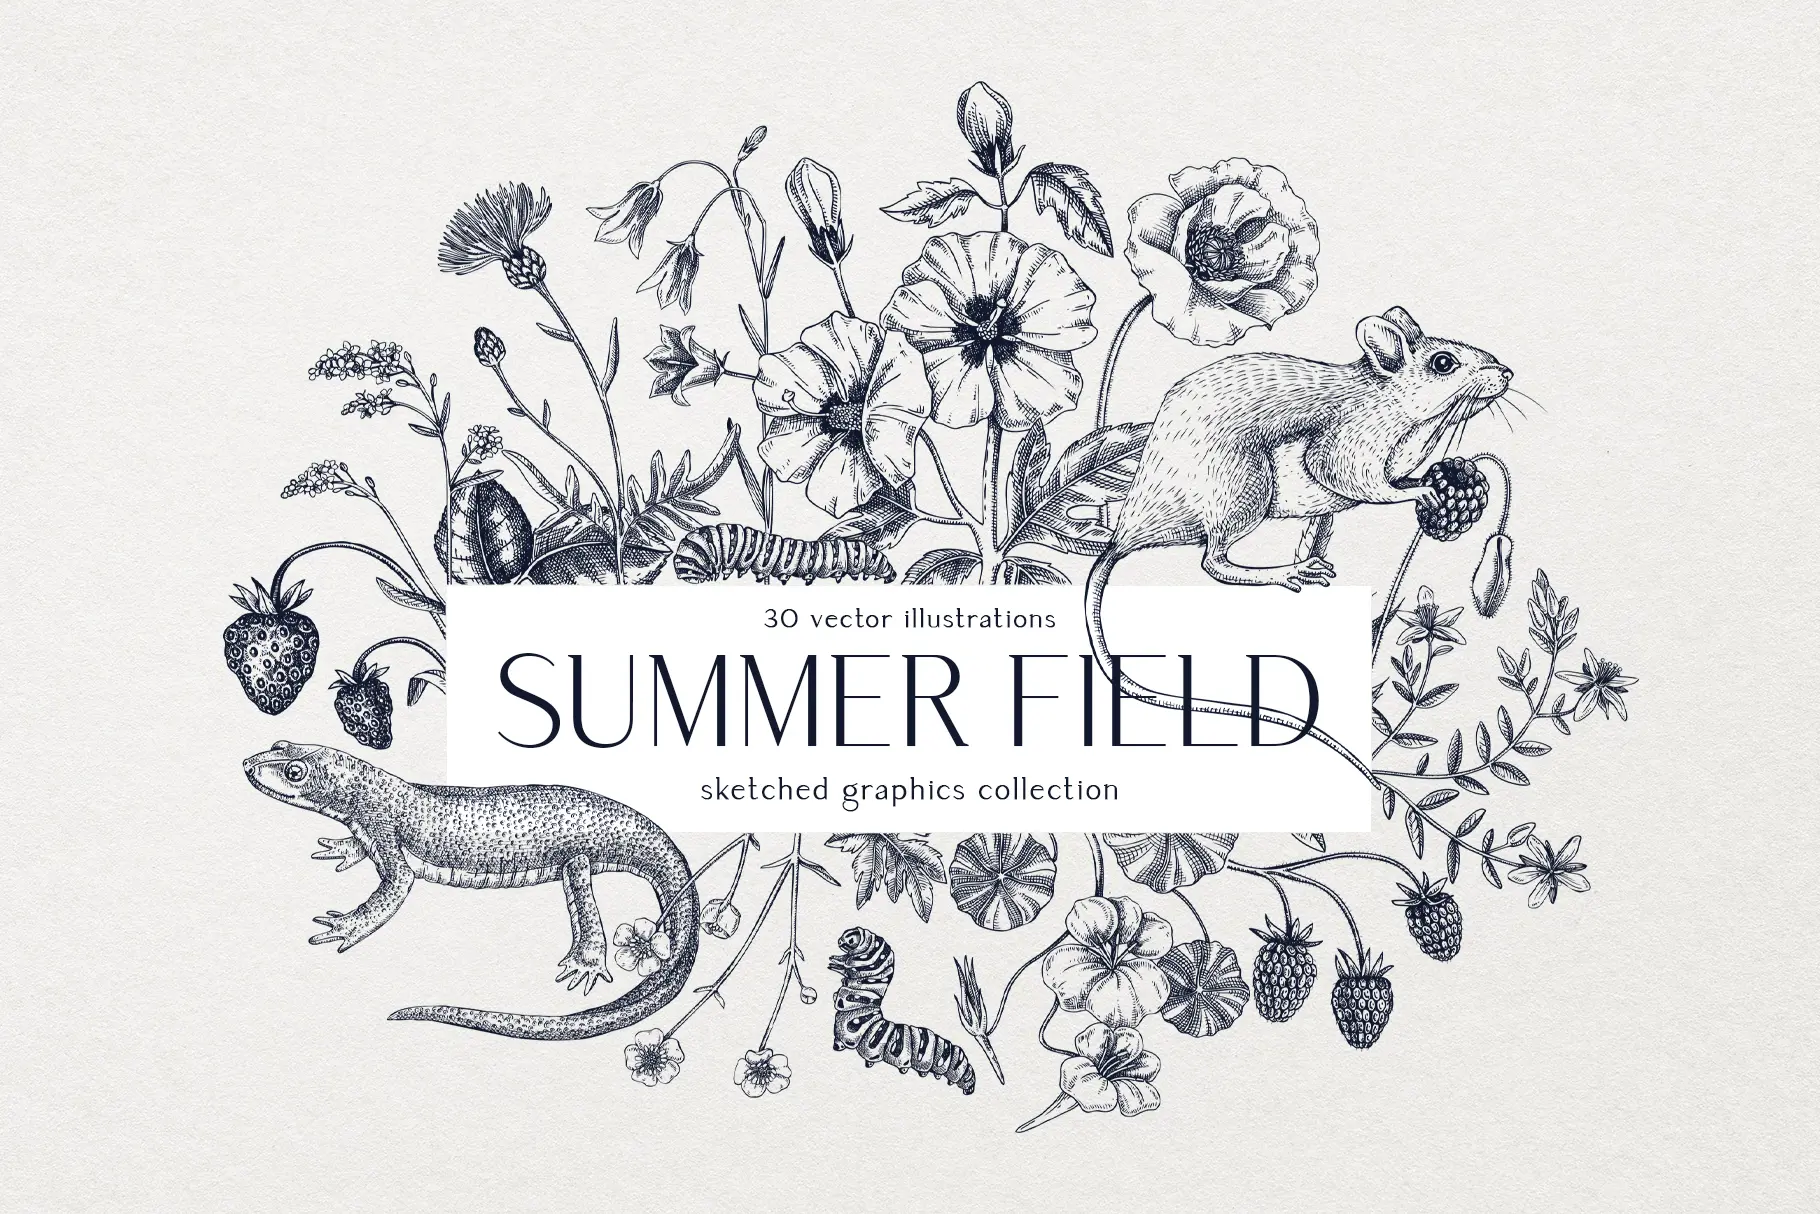 Wildflower sketches. Hand-drawn vector illustrations. Summer field. Vintage floral designs.  Illustration